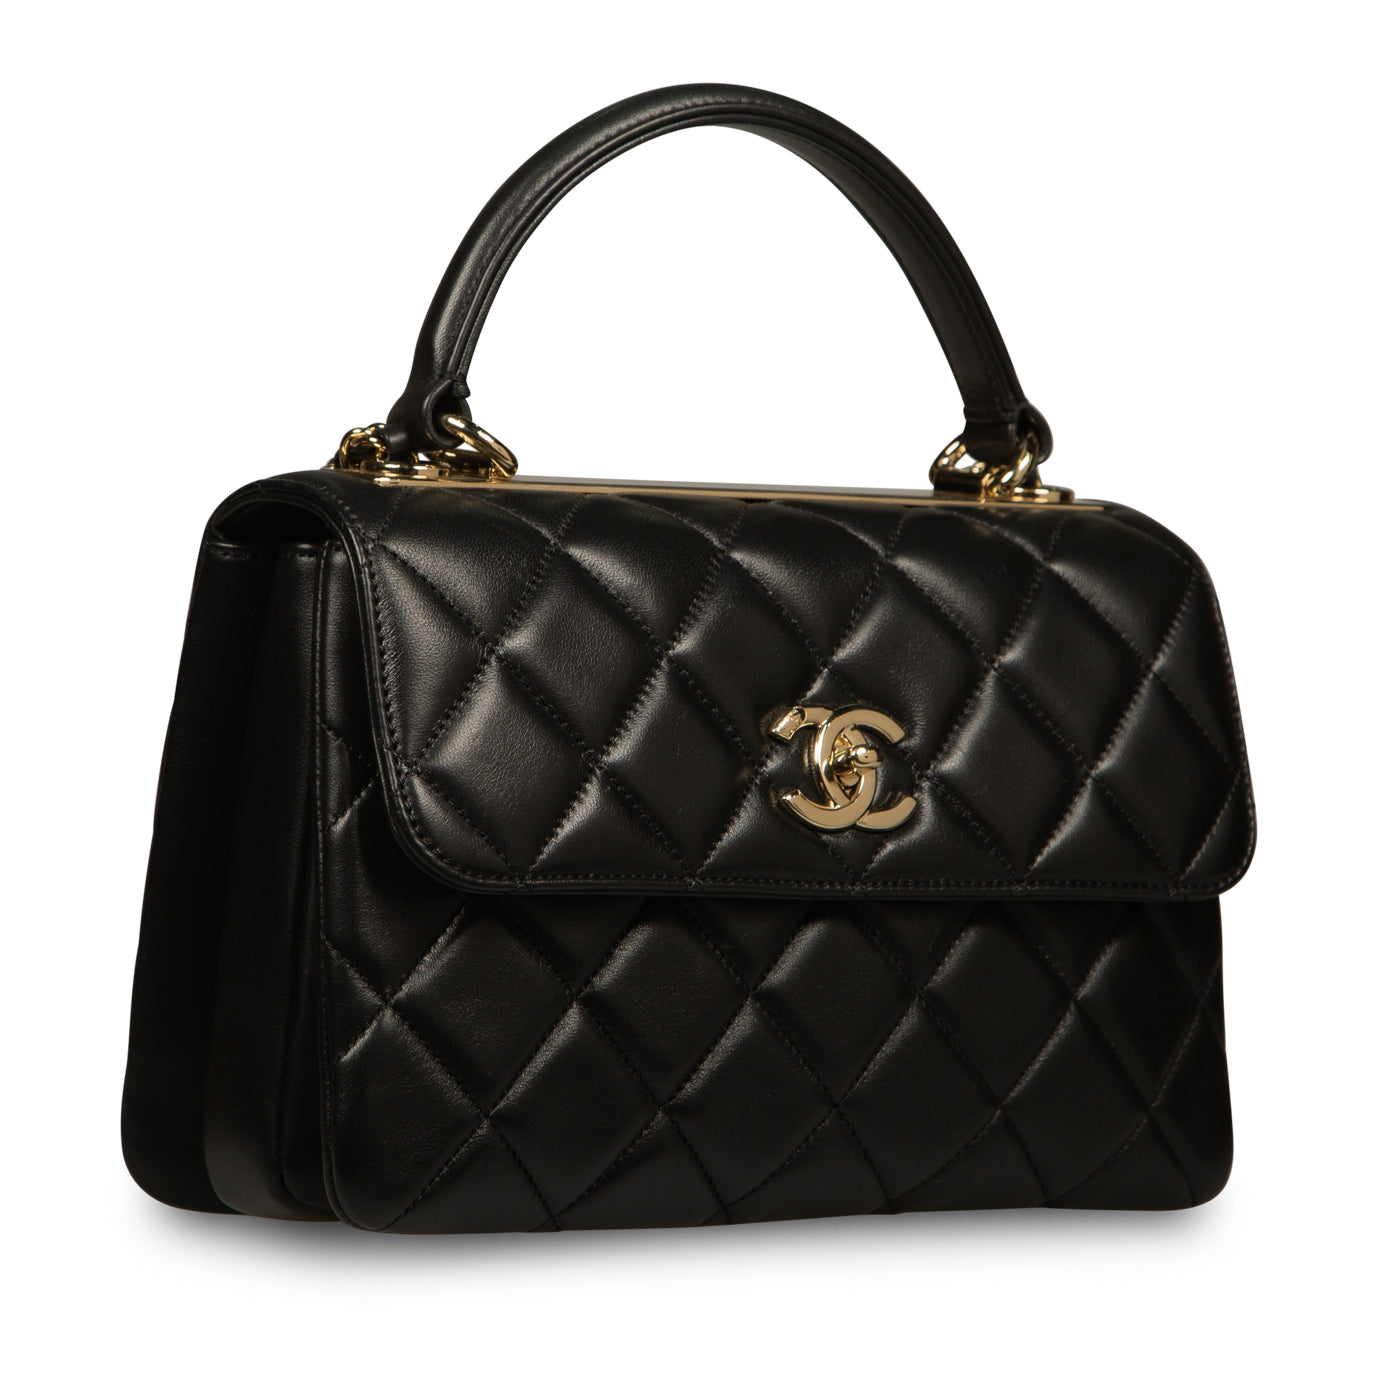 Chanel - Small Trendy CC Flap Bag - Brand New - Black Lambskin